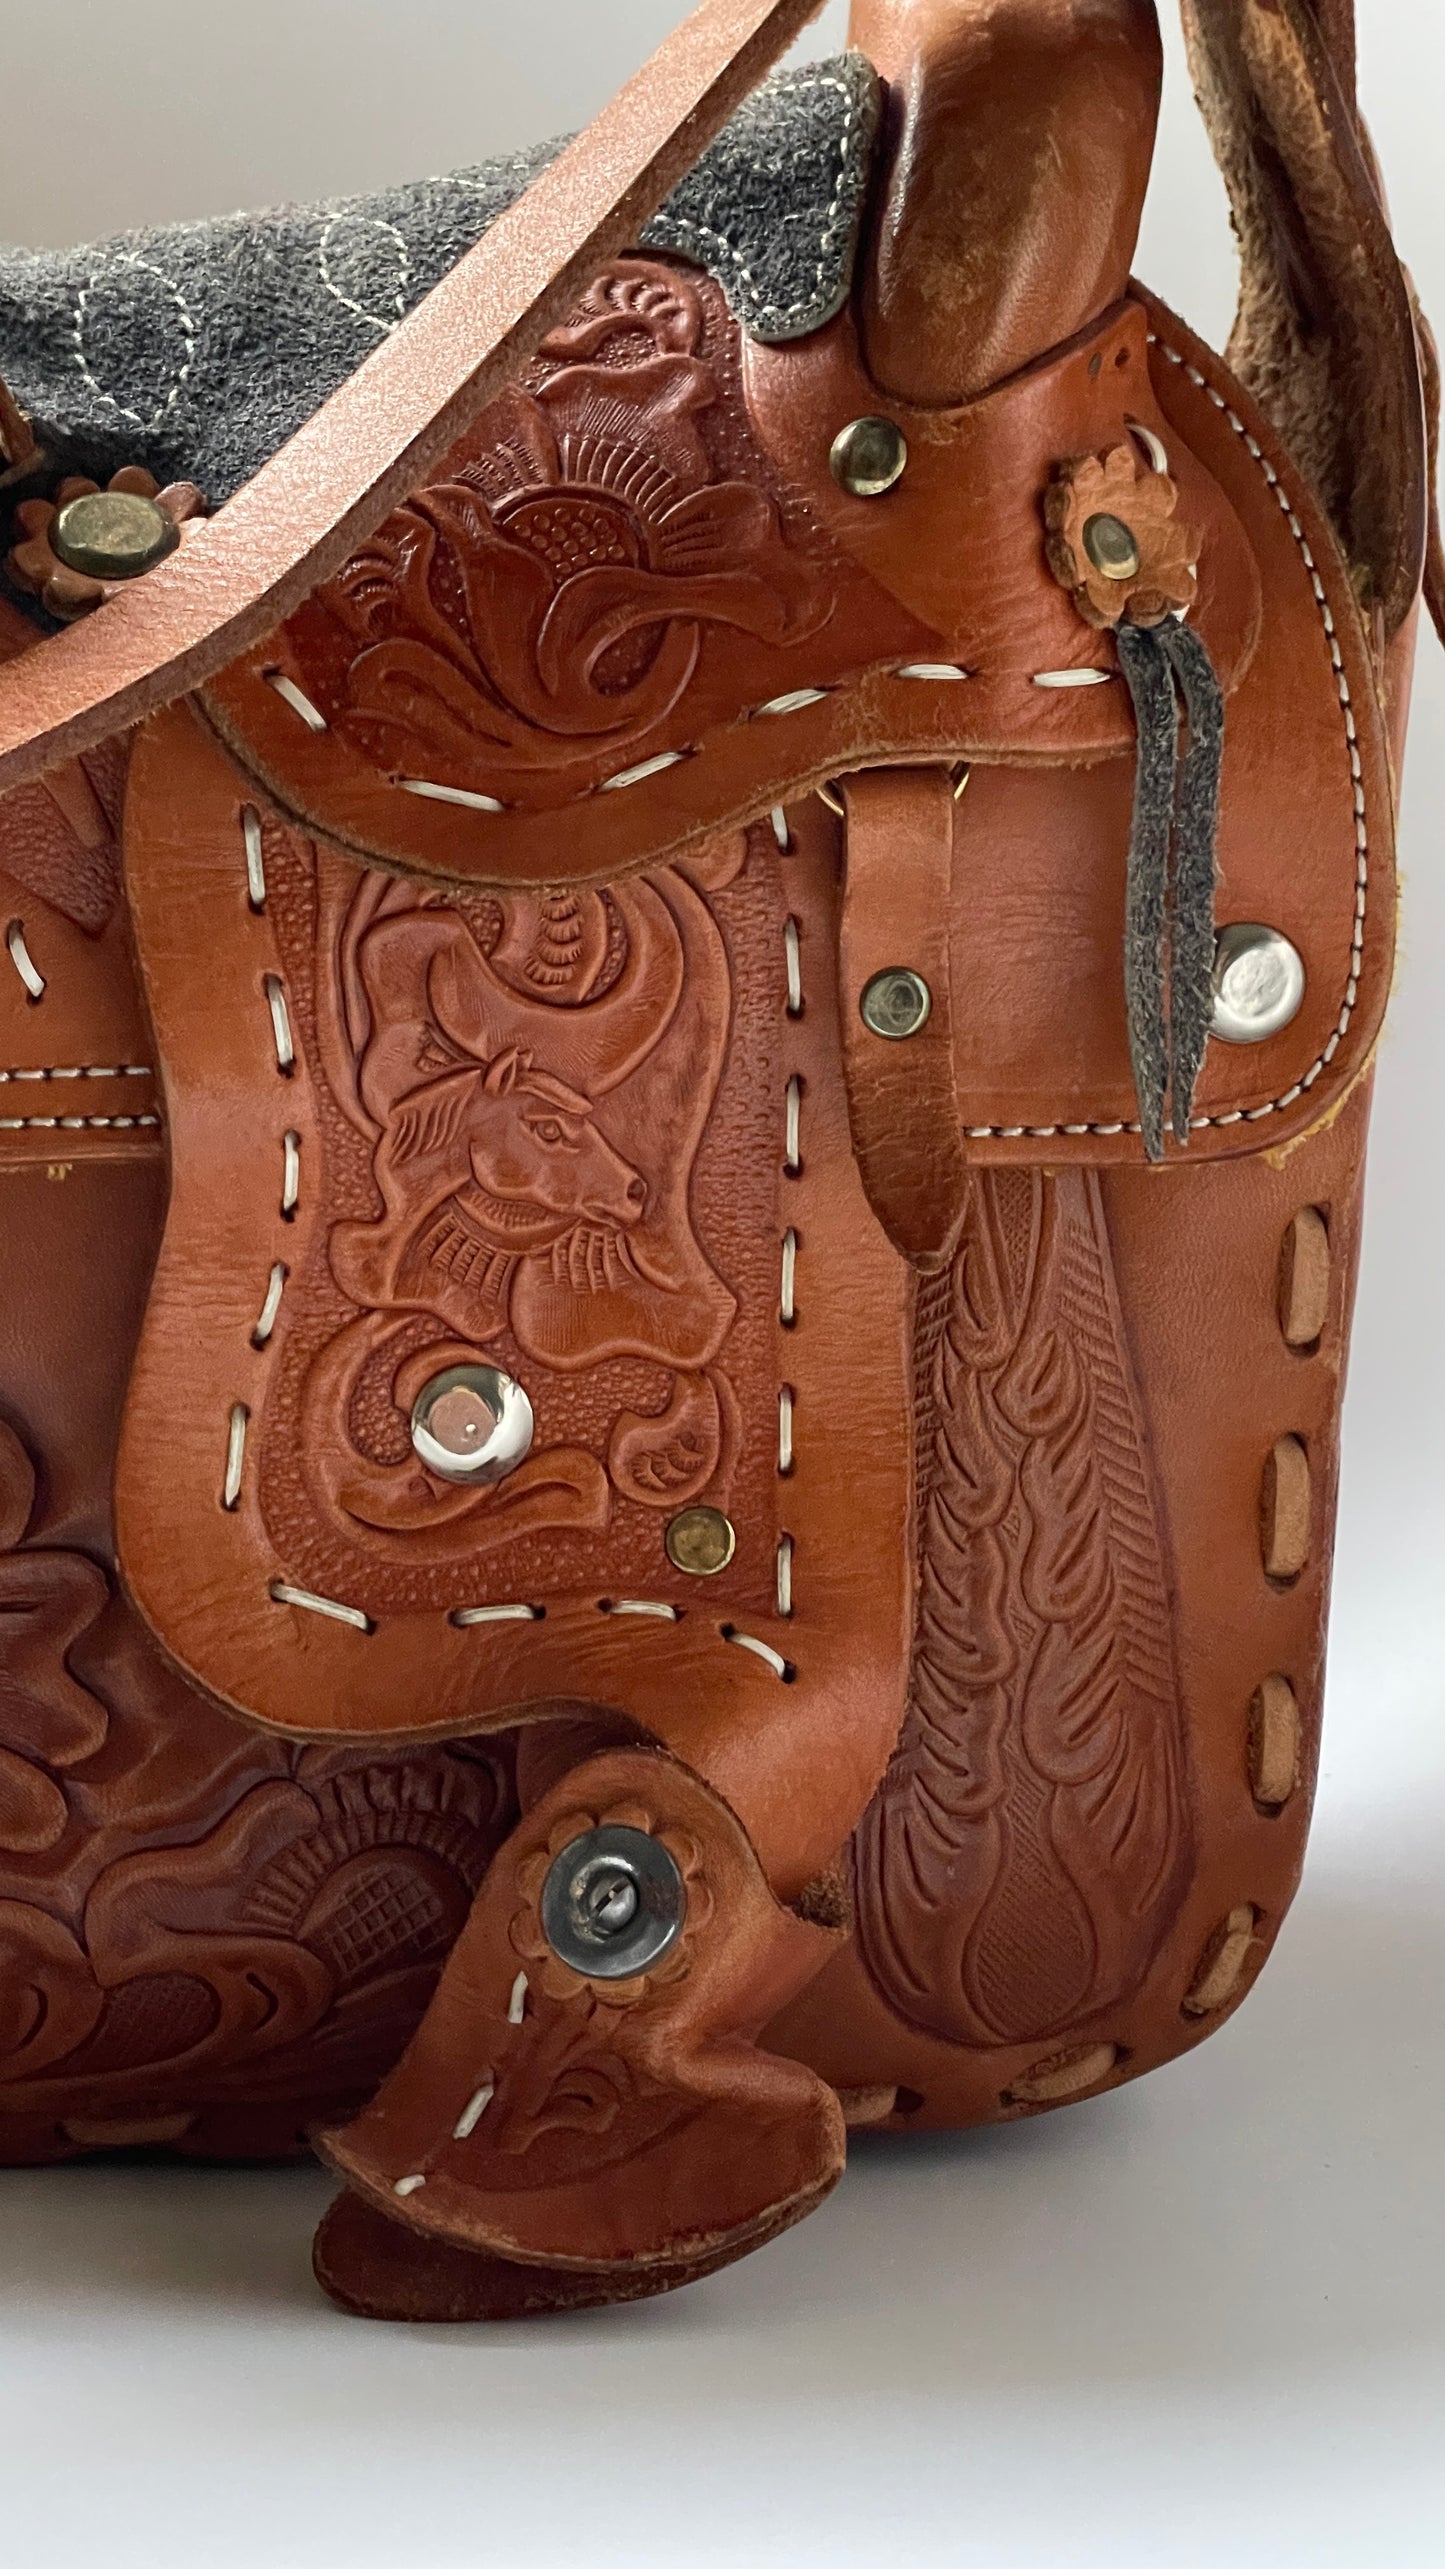 Tooled saddle bag